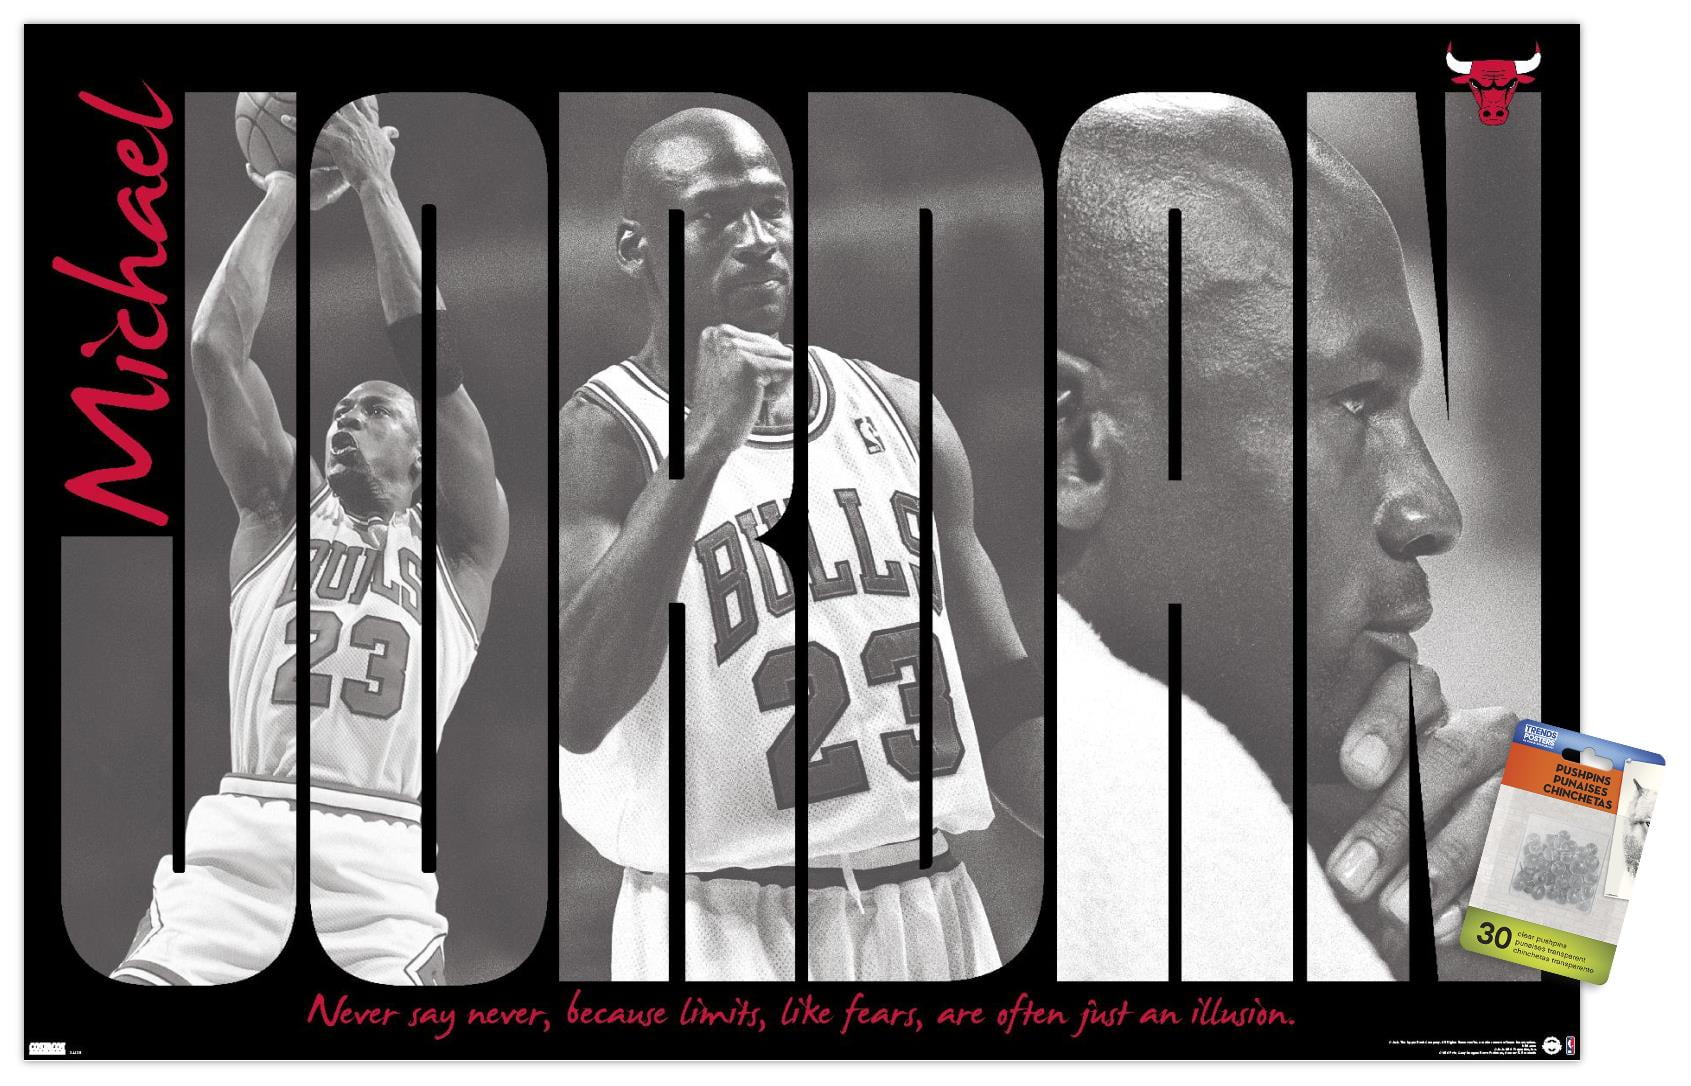 Michael Jordan - Jersey Wall Poster, 22.375 x 34 